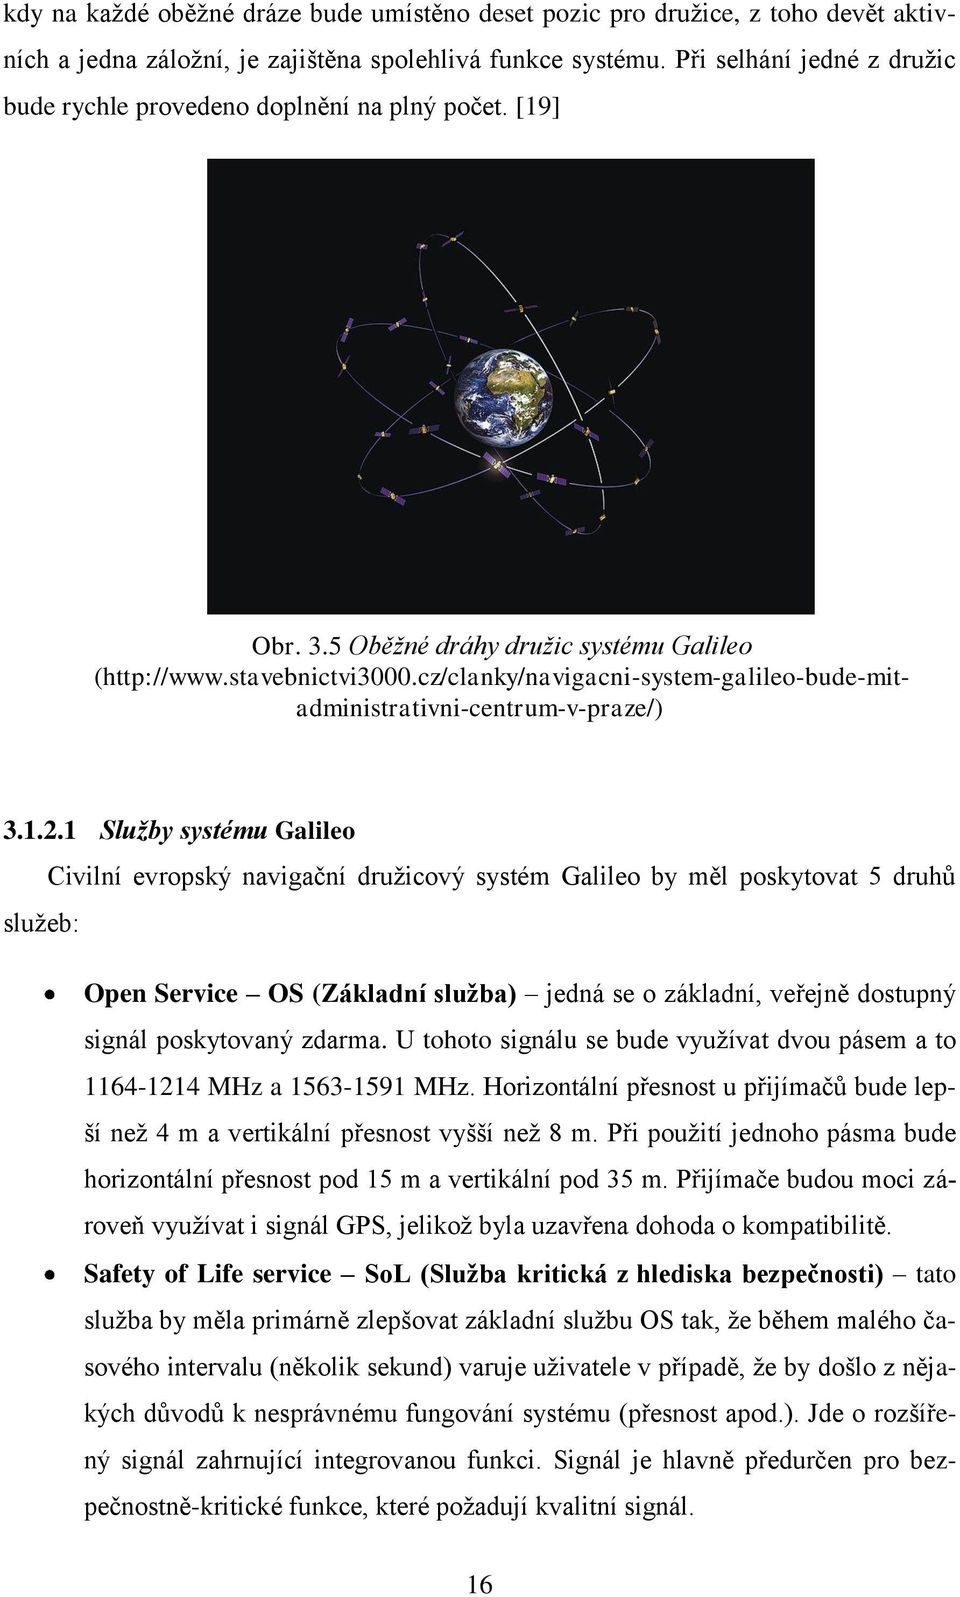 cz/clanky/navigacni-system-galileo-bude-mitadministrativni-centrum-v-praze/) 3.1.2.